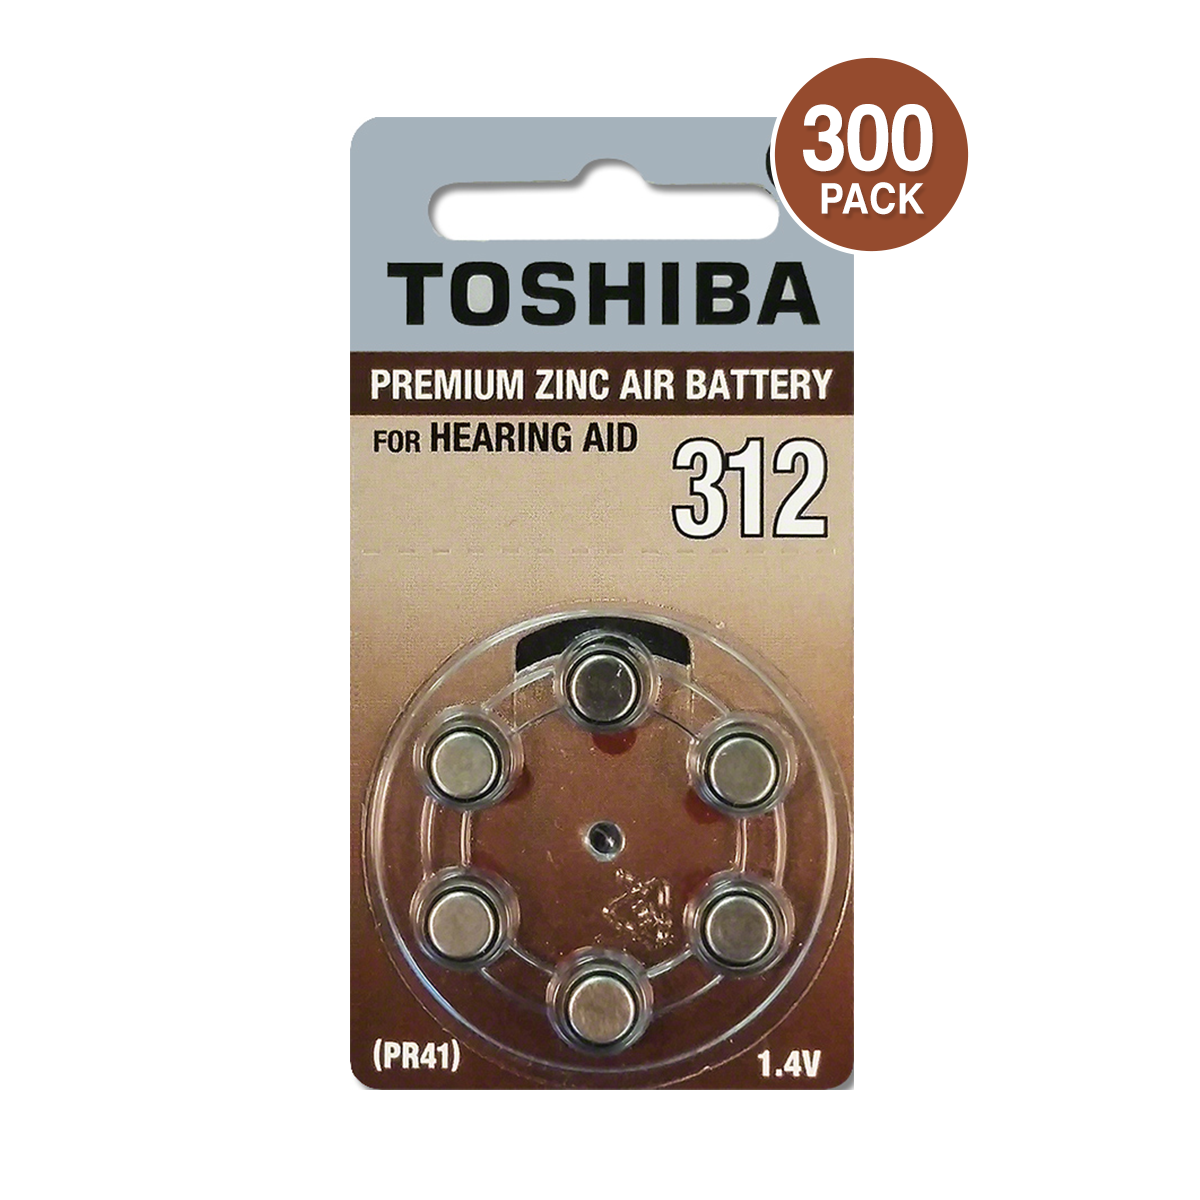 Toshiba Size 312 Hearing Aid Batteries PR41 (300 Batteries)